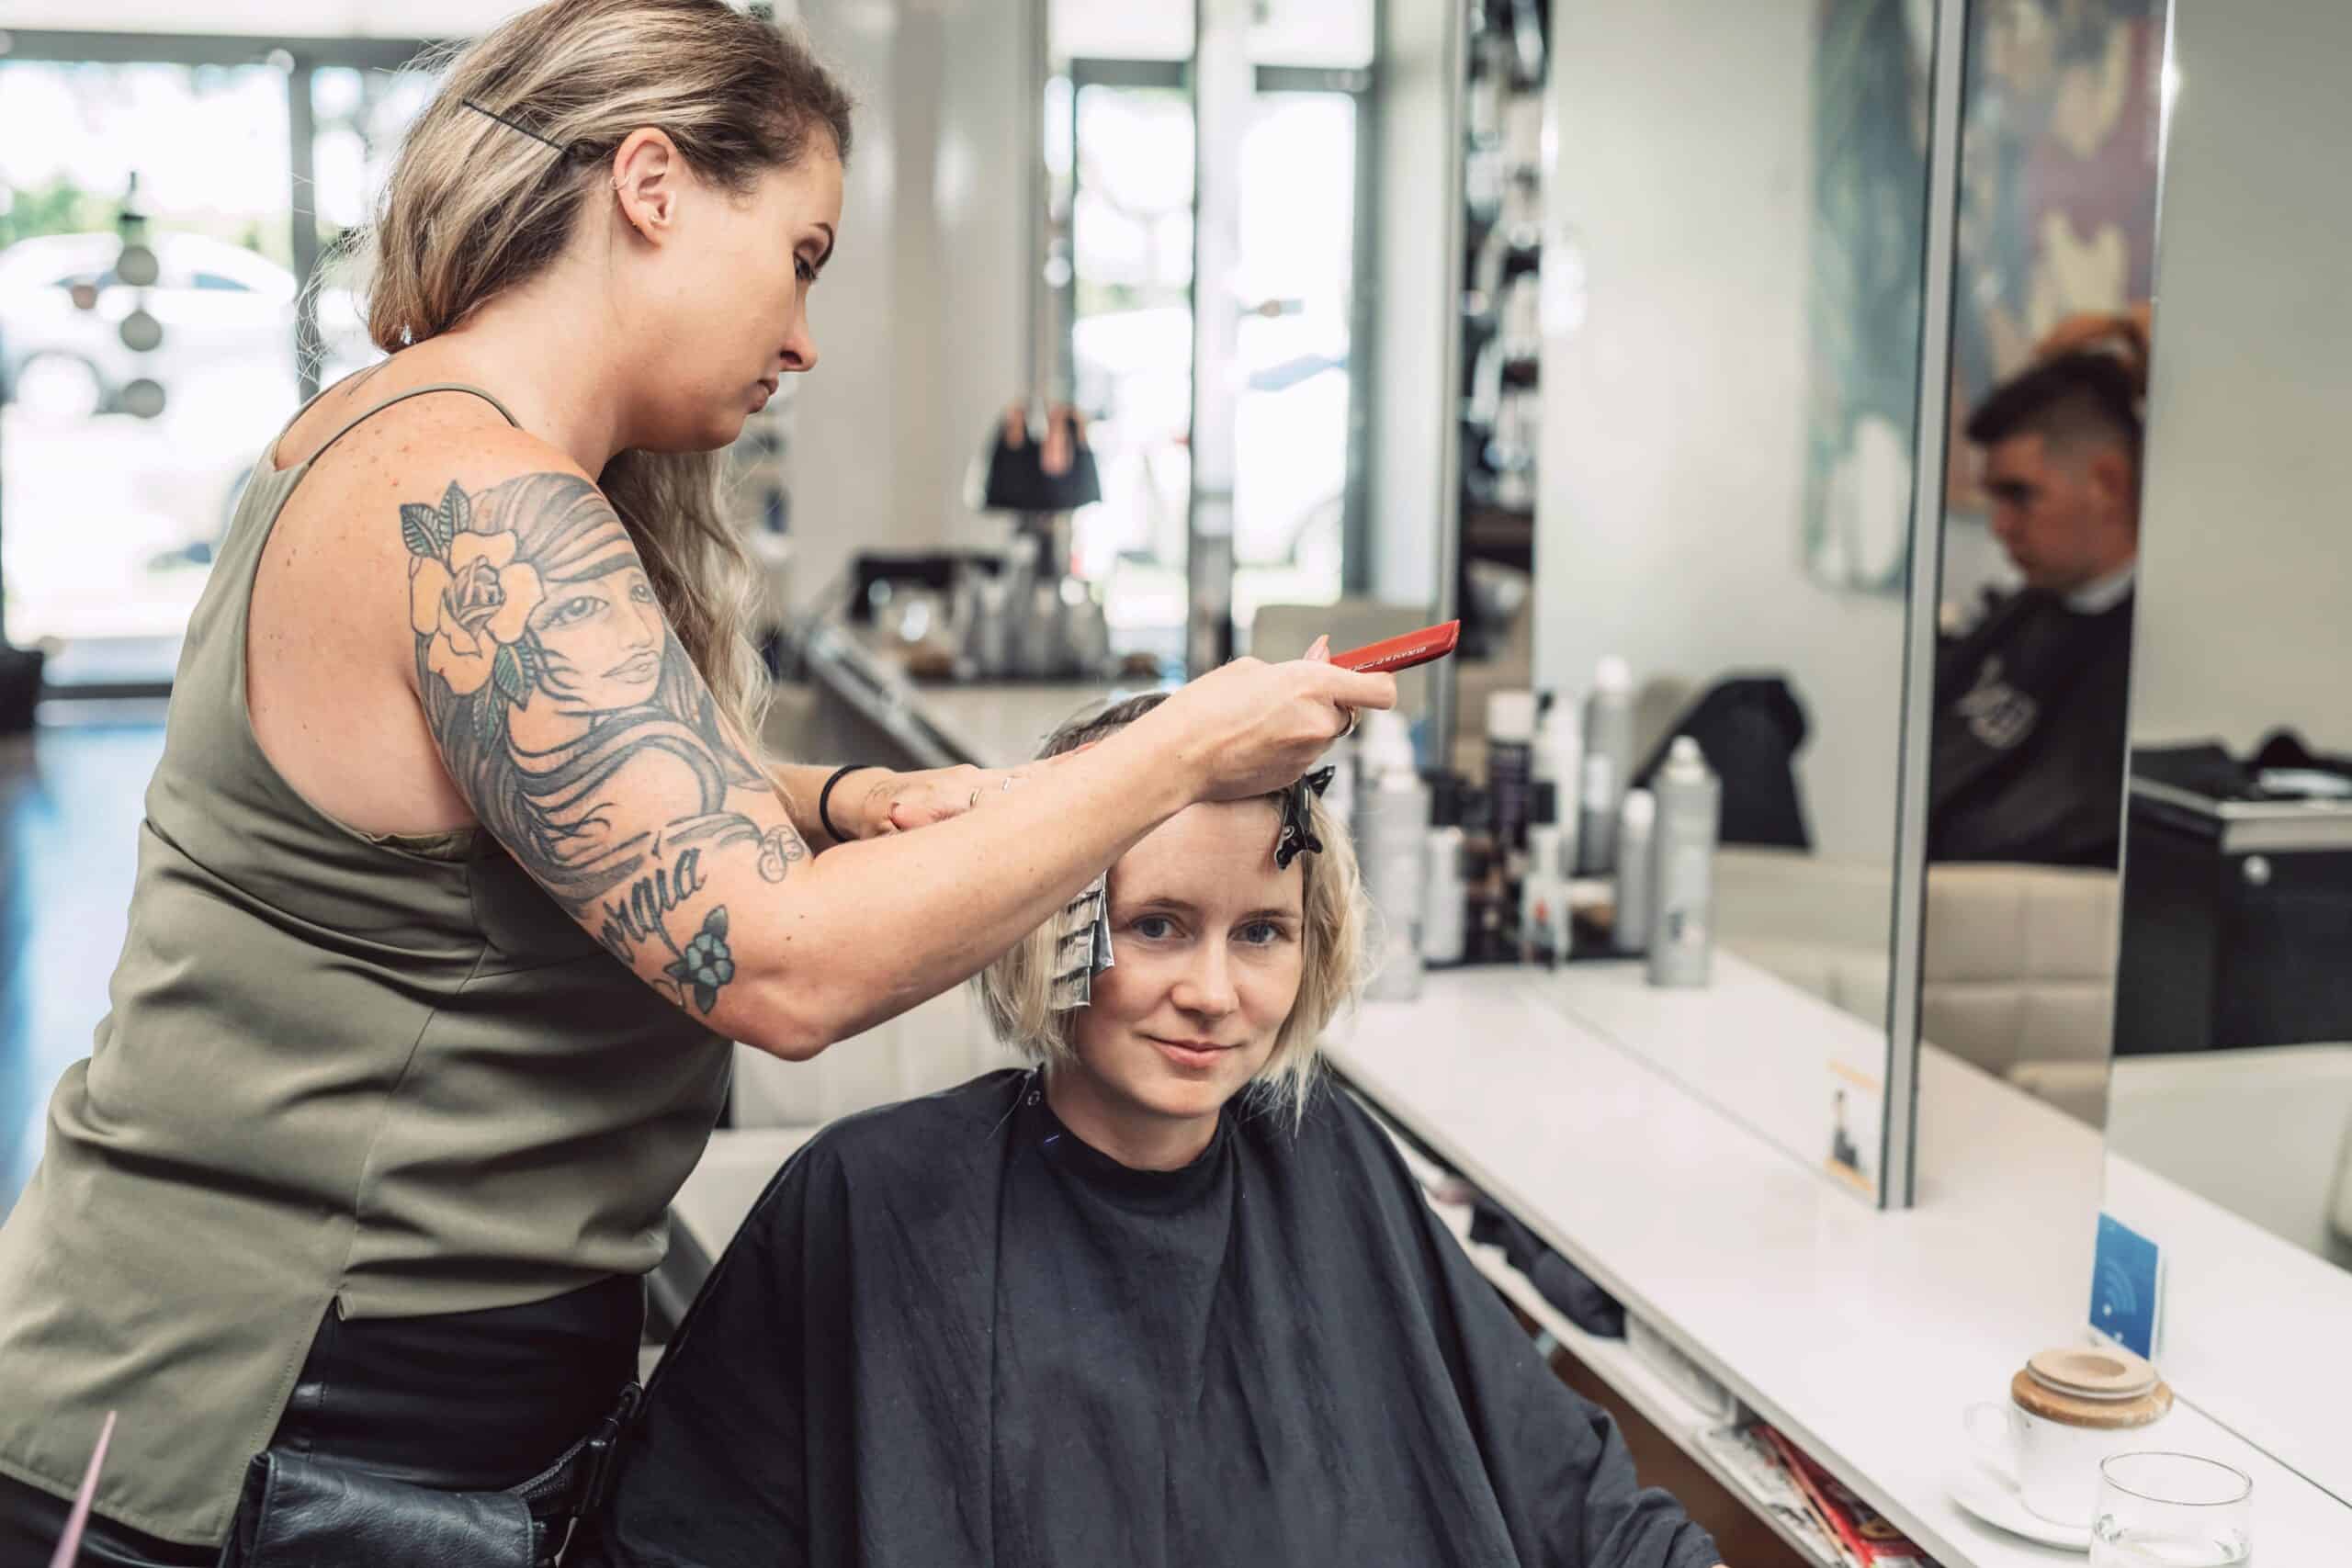 hairdresser colouring woman s hair in salon 2022 11 03 08 51 41 utc min scaled